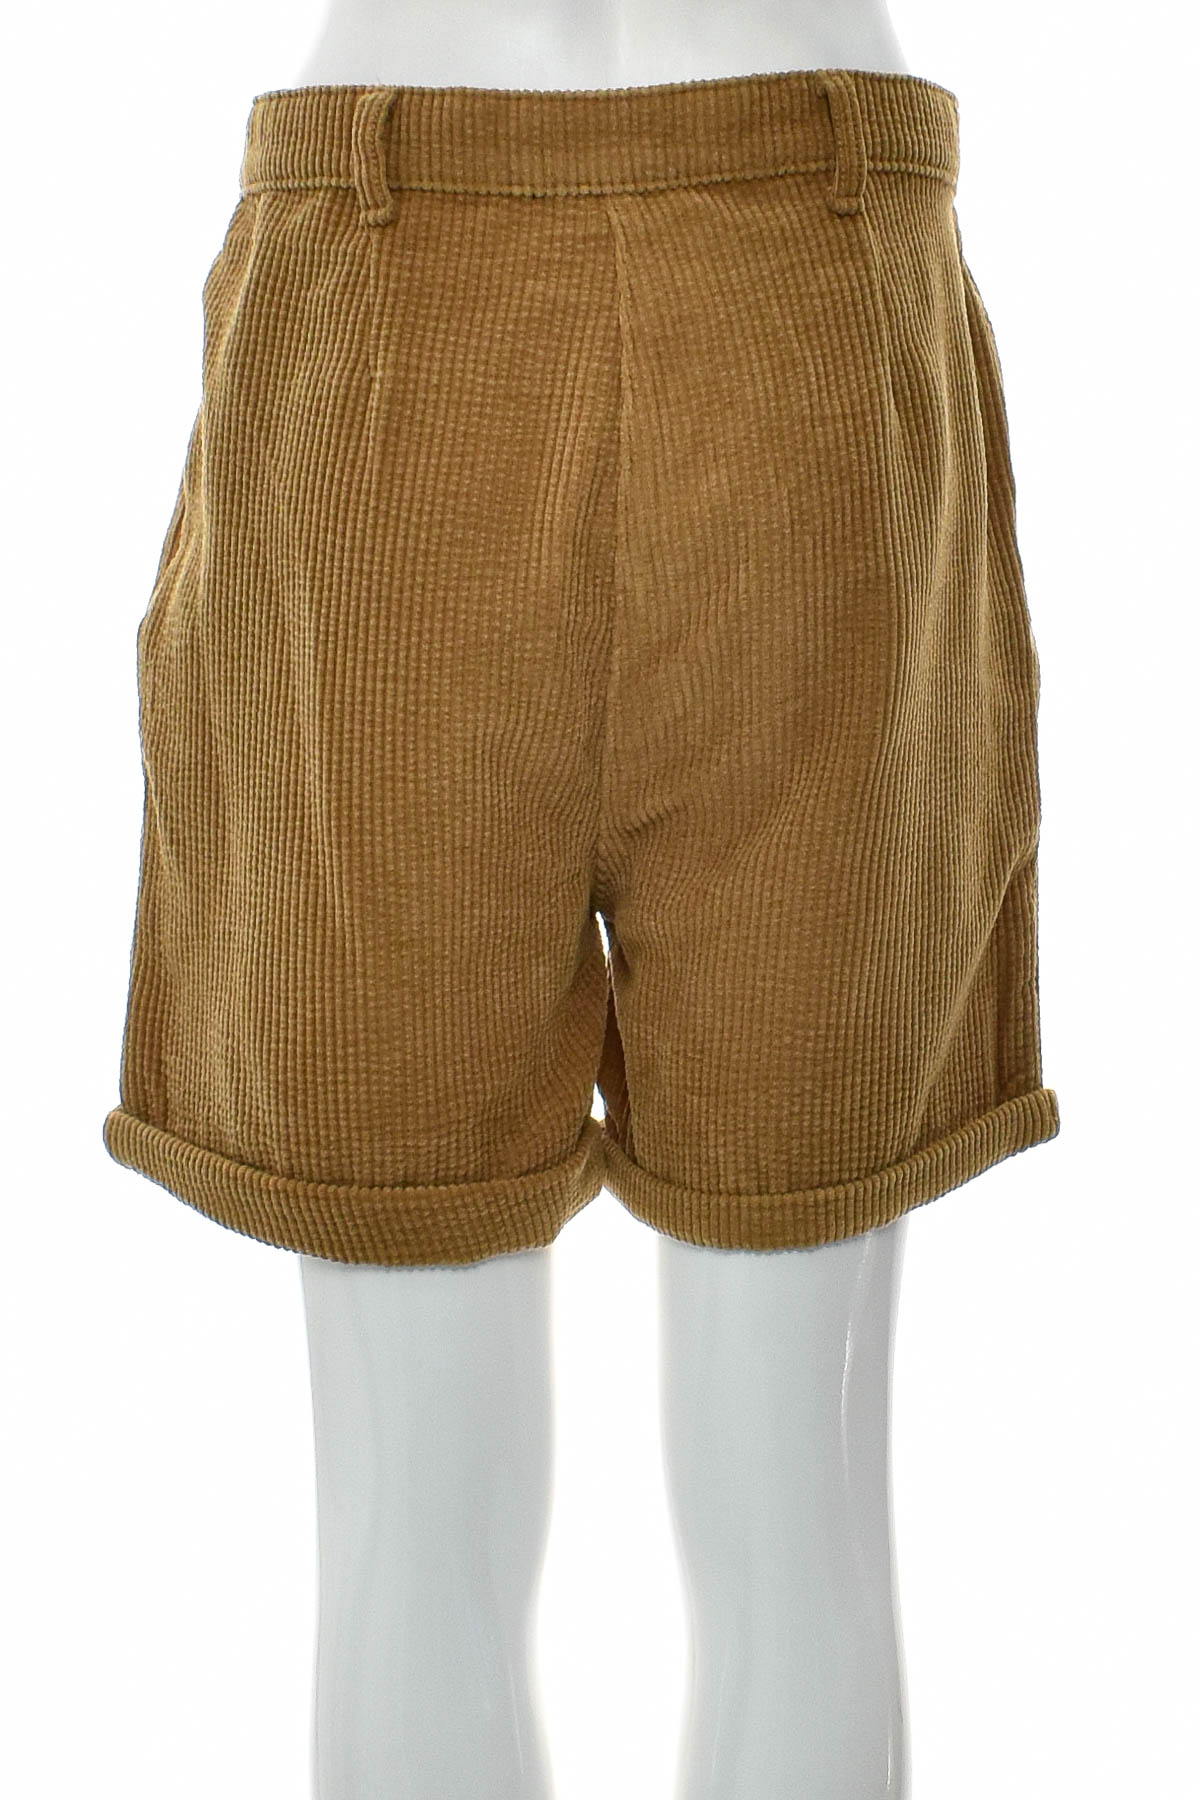 Female shorts - G!na - 1